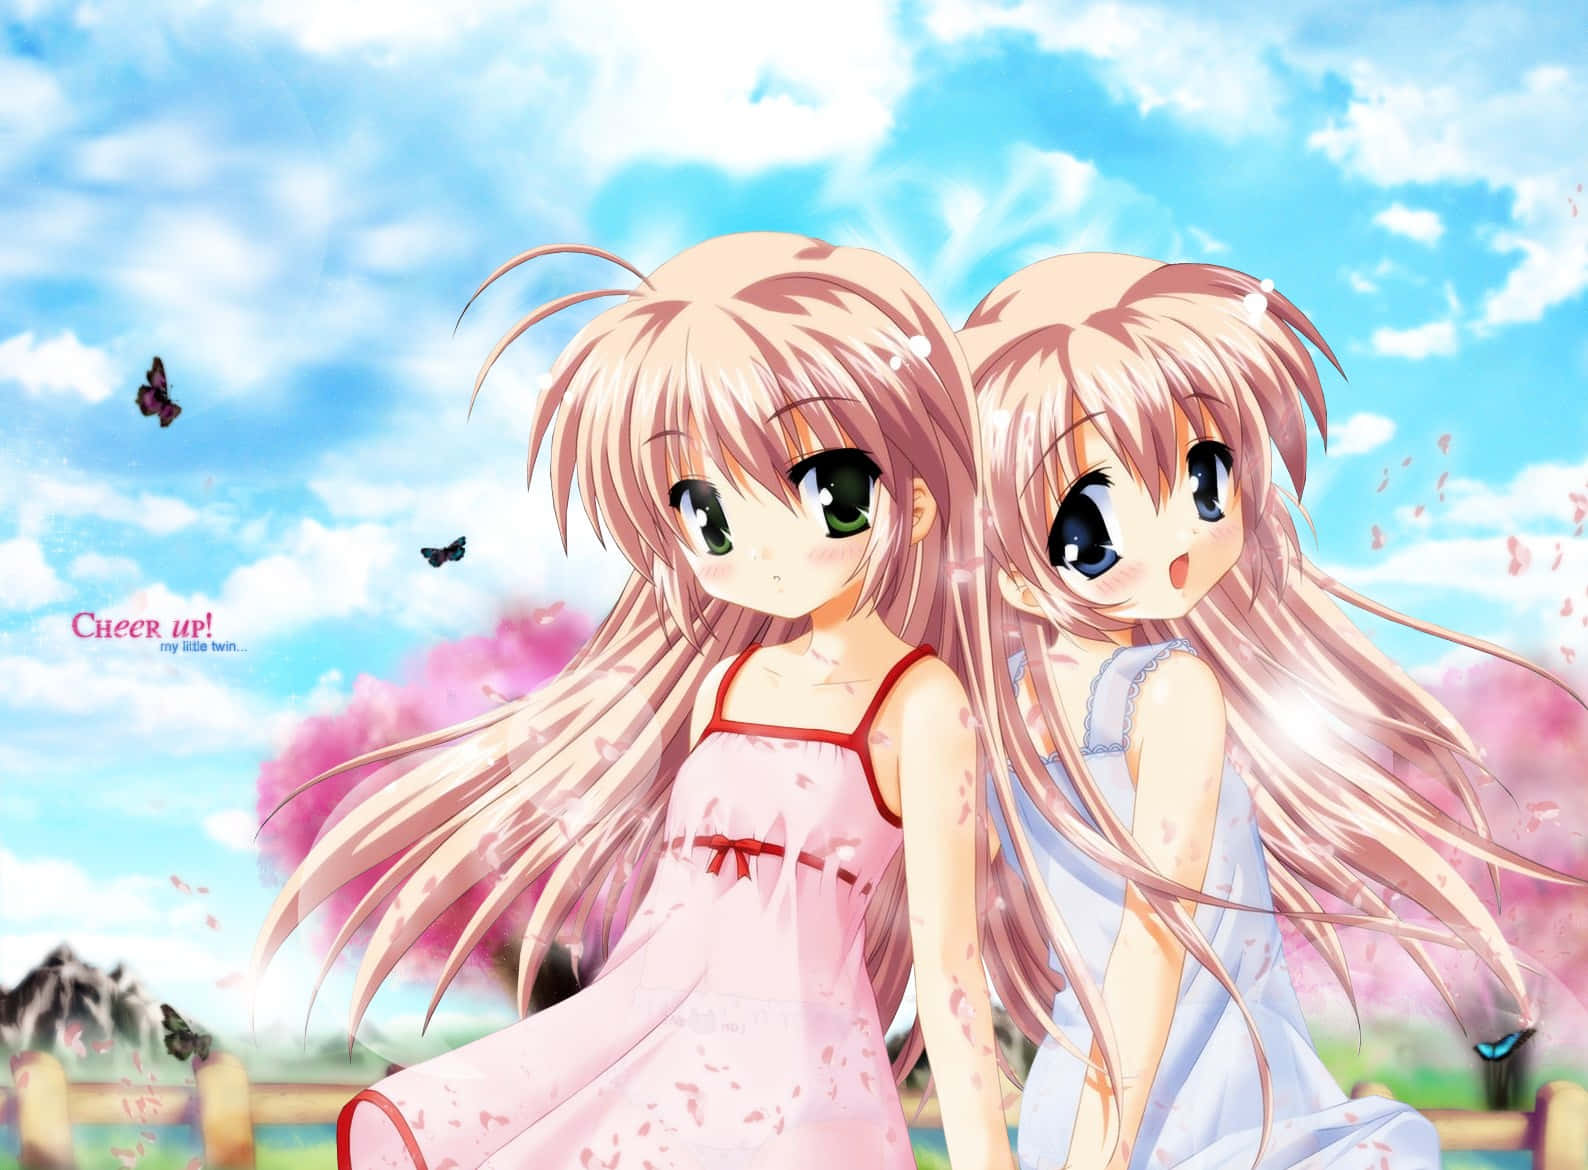 Dazzling Anime Digital Artwork Of Cute Sisters